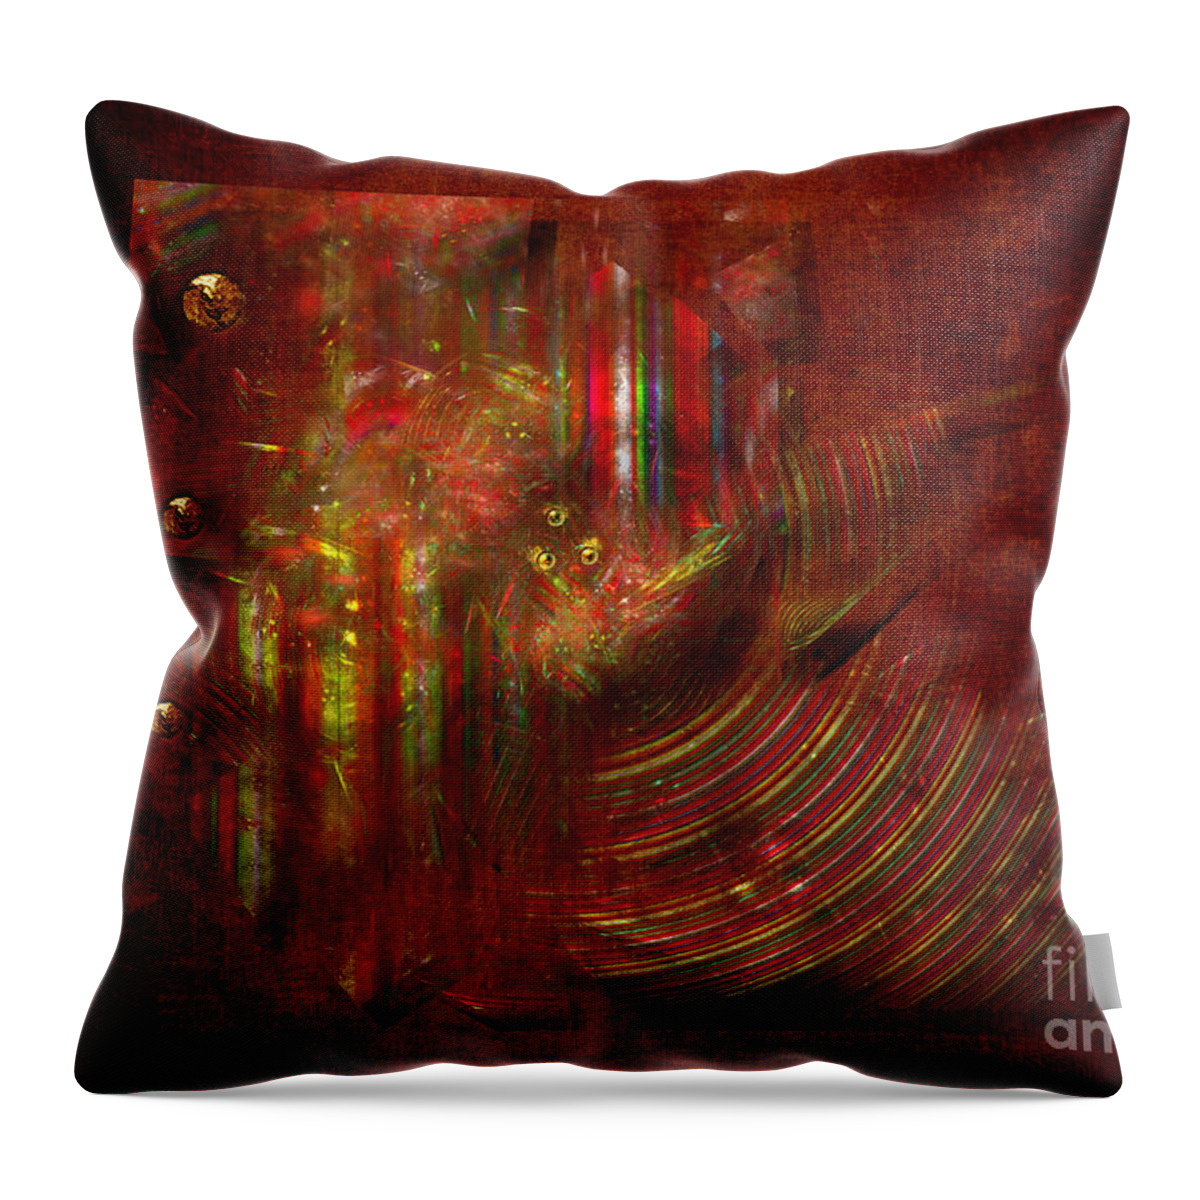 Abstract Throw Pillow featuring the digital art Strips by Alexa Szlavics